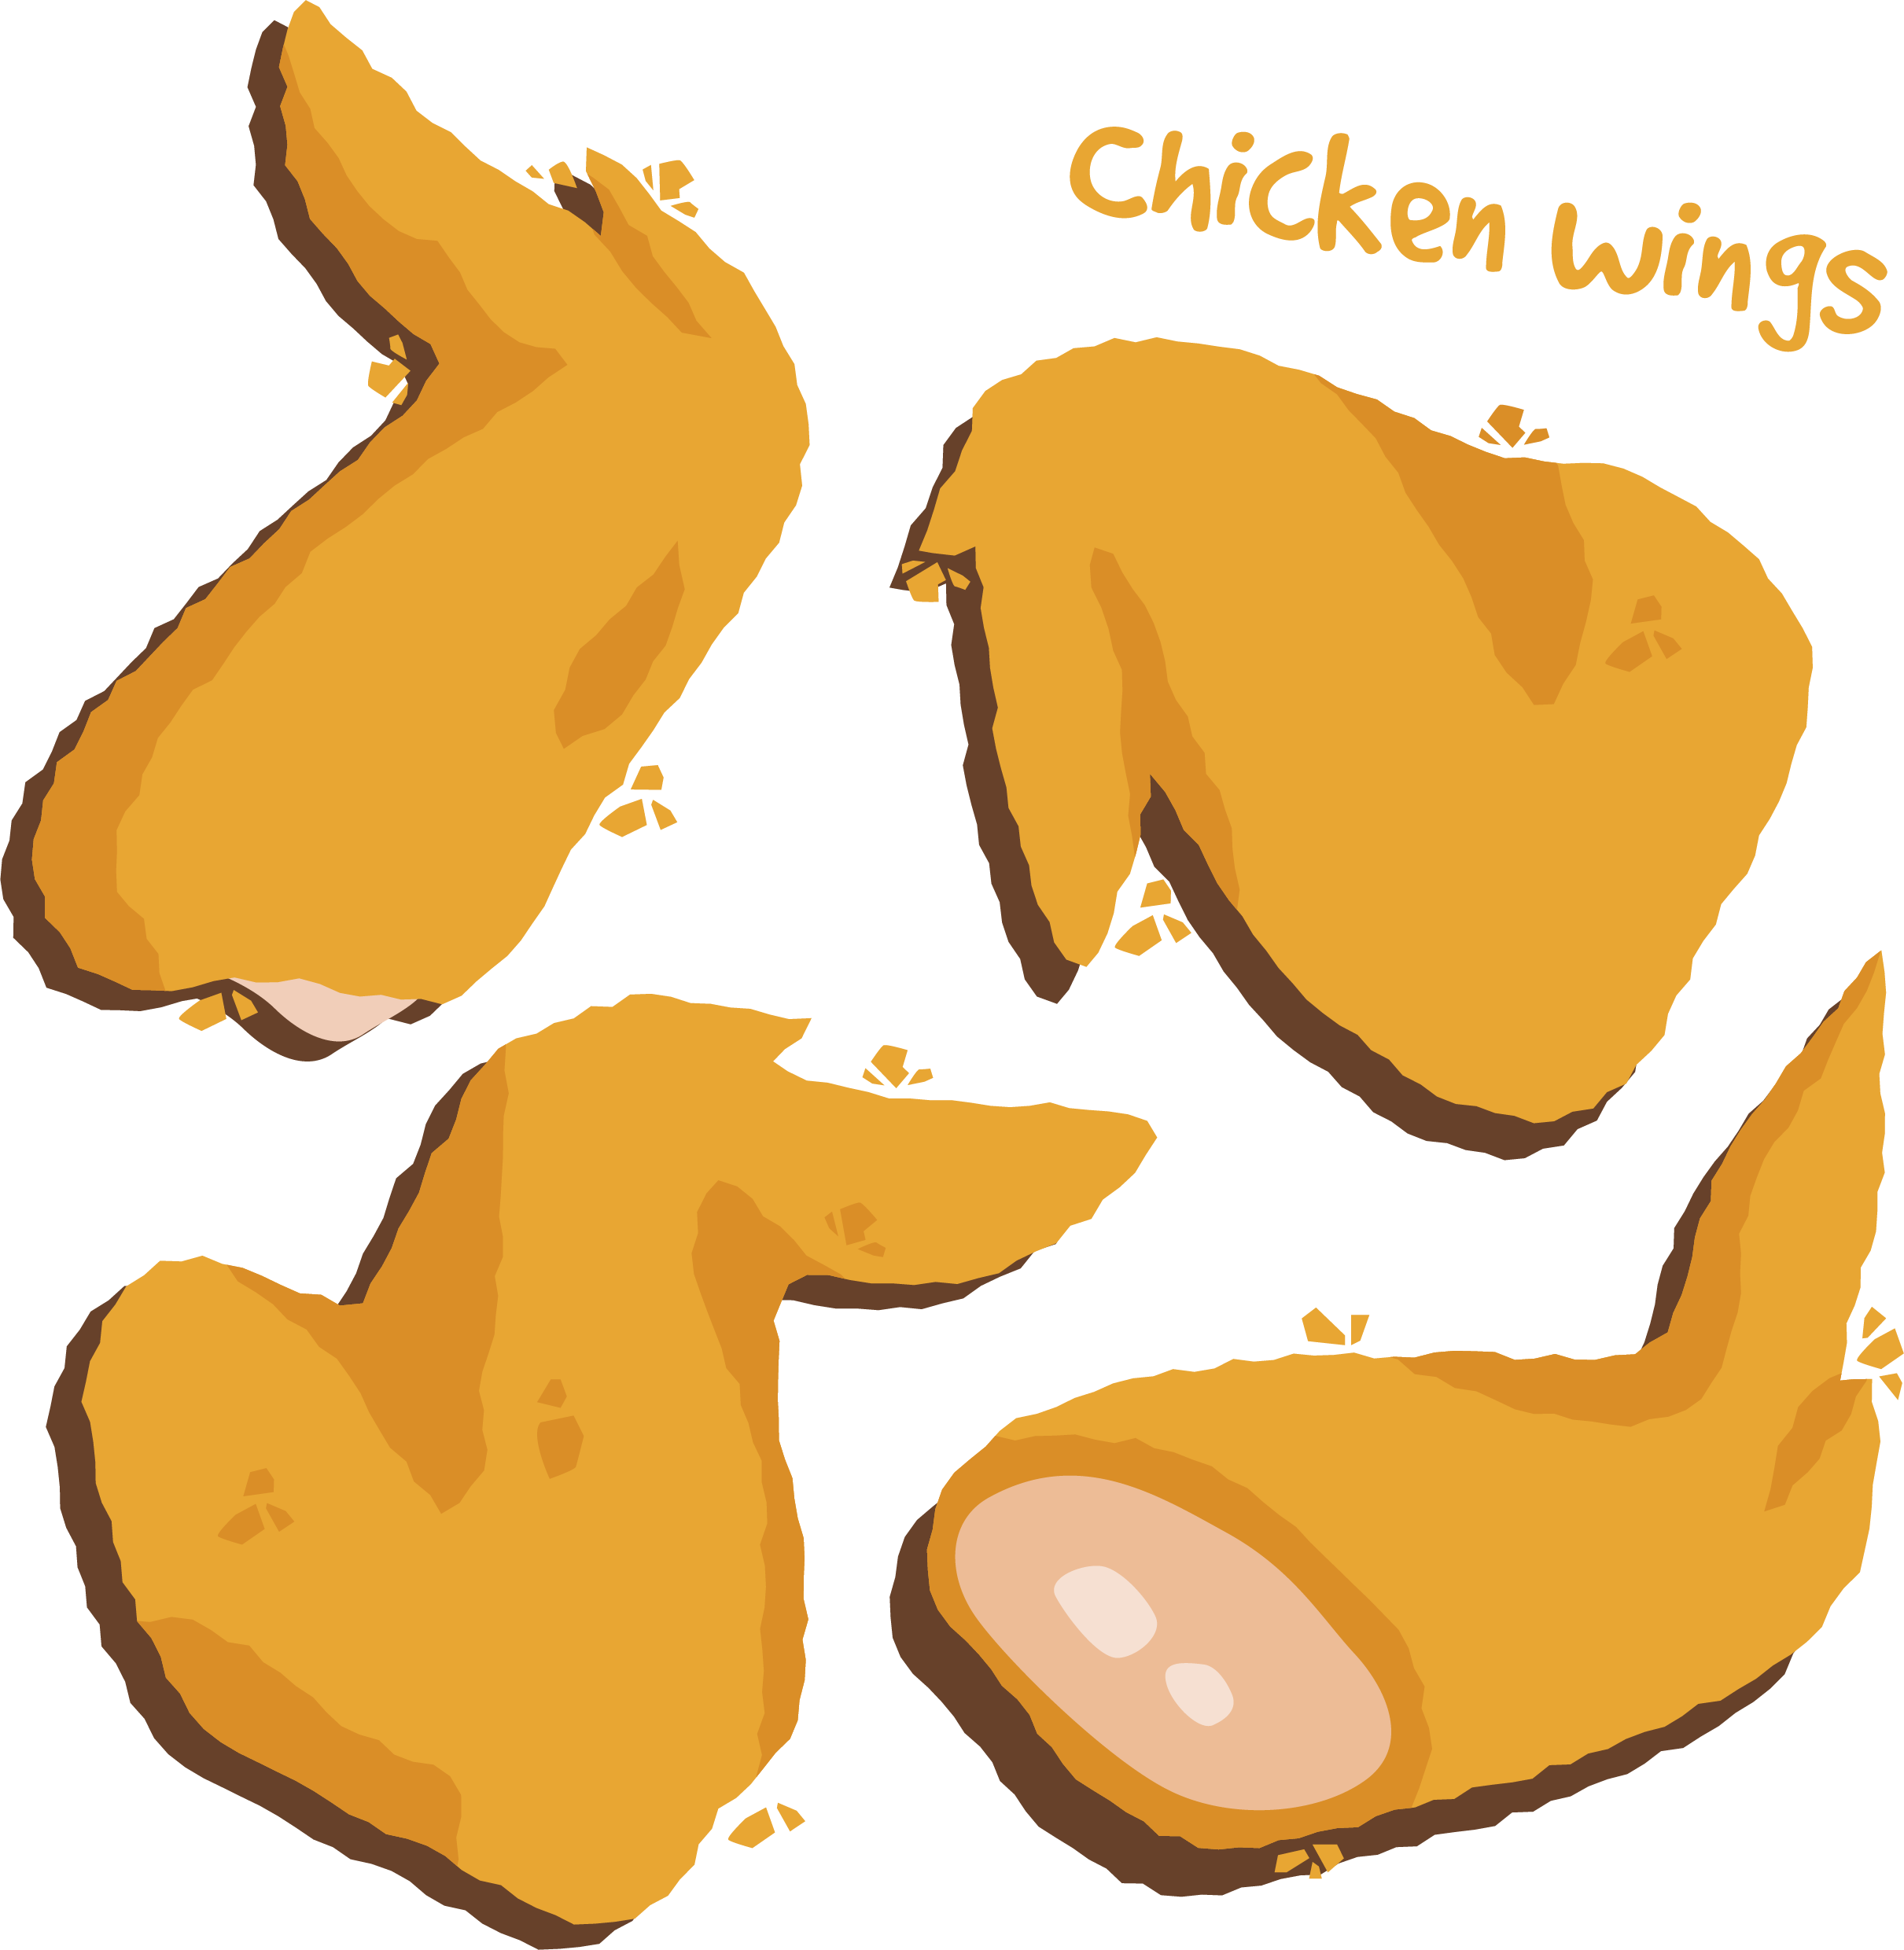 Buffalo Wing Fried Chicken Junk Food Kfc - Deep Frying (2421x2480)